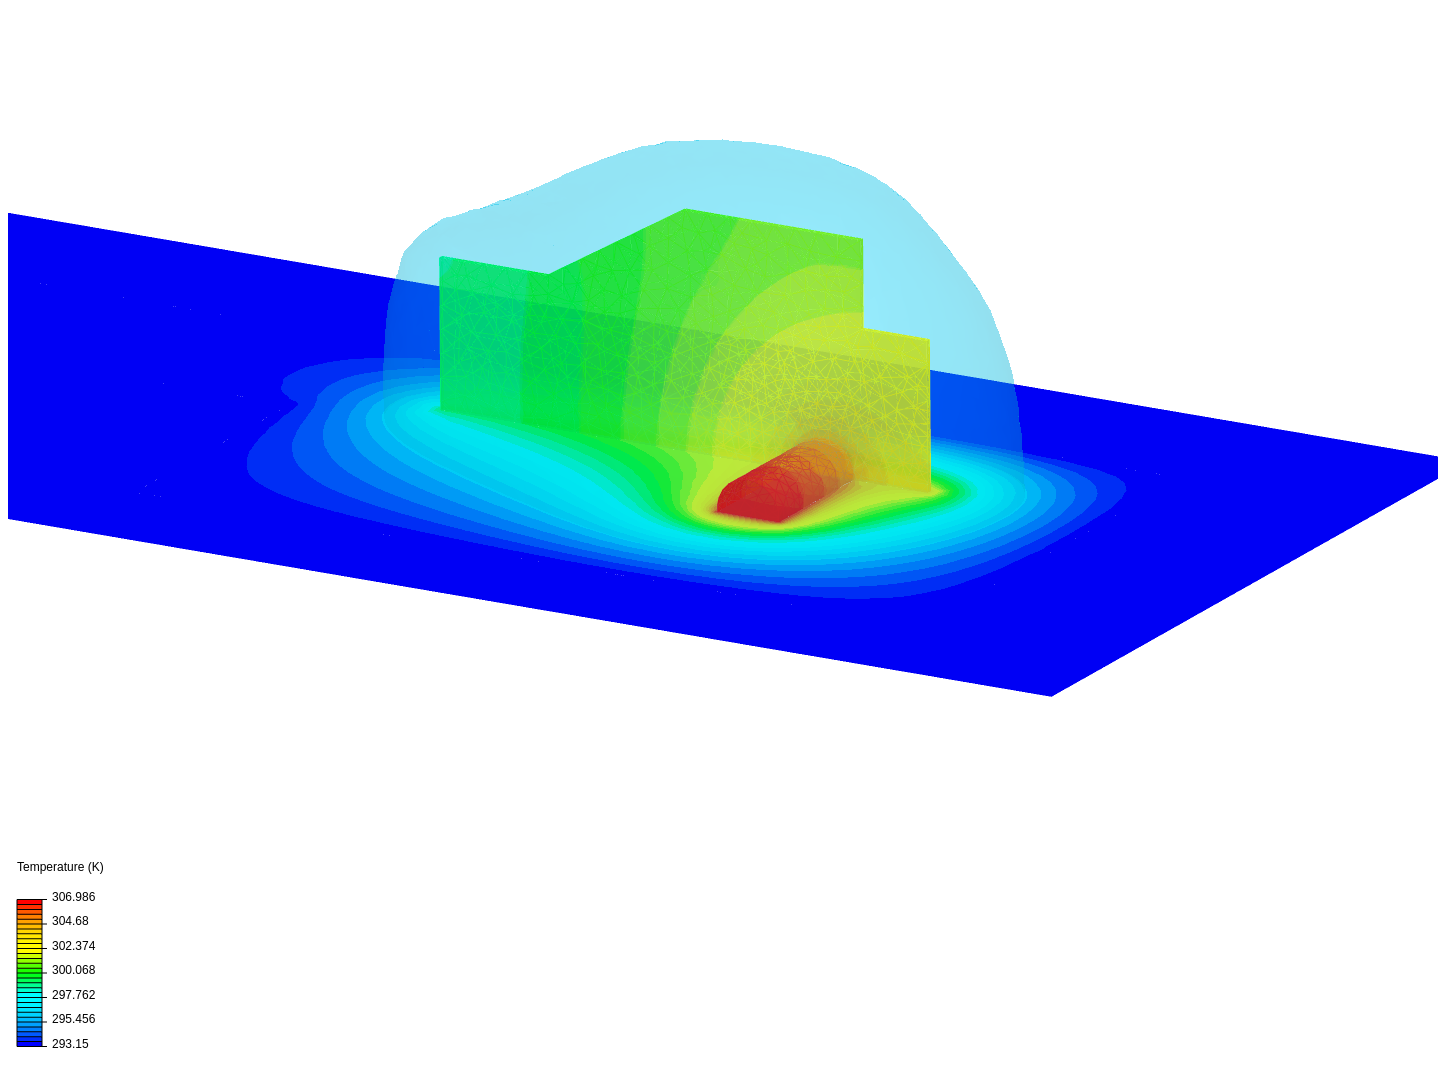 encapsulation heat flow image